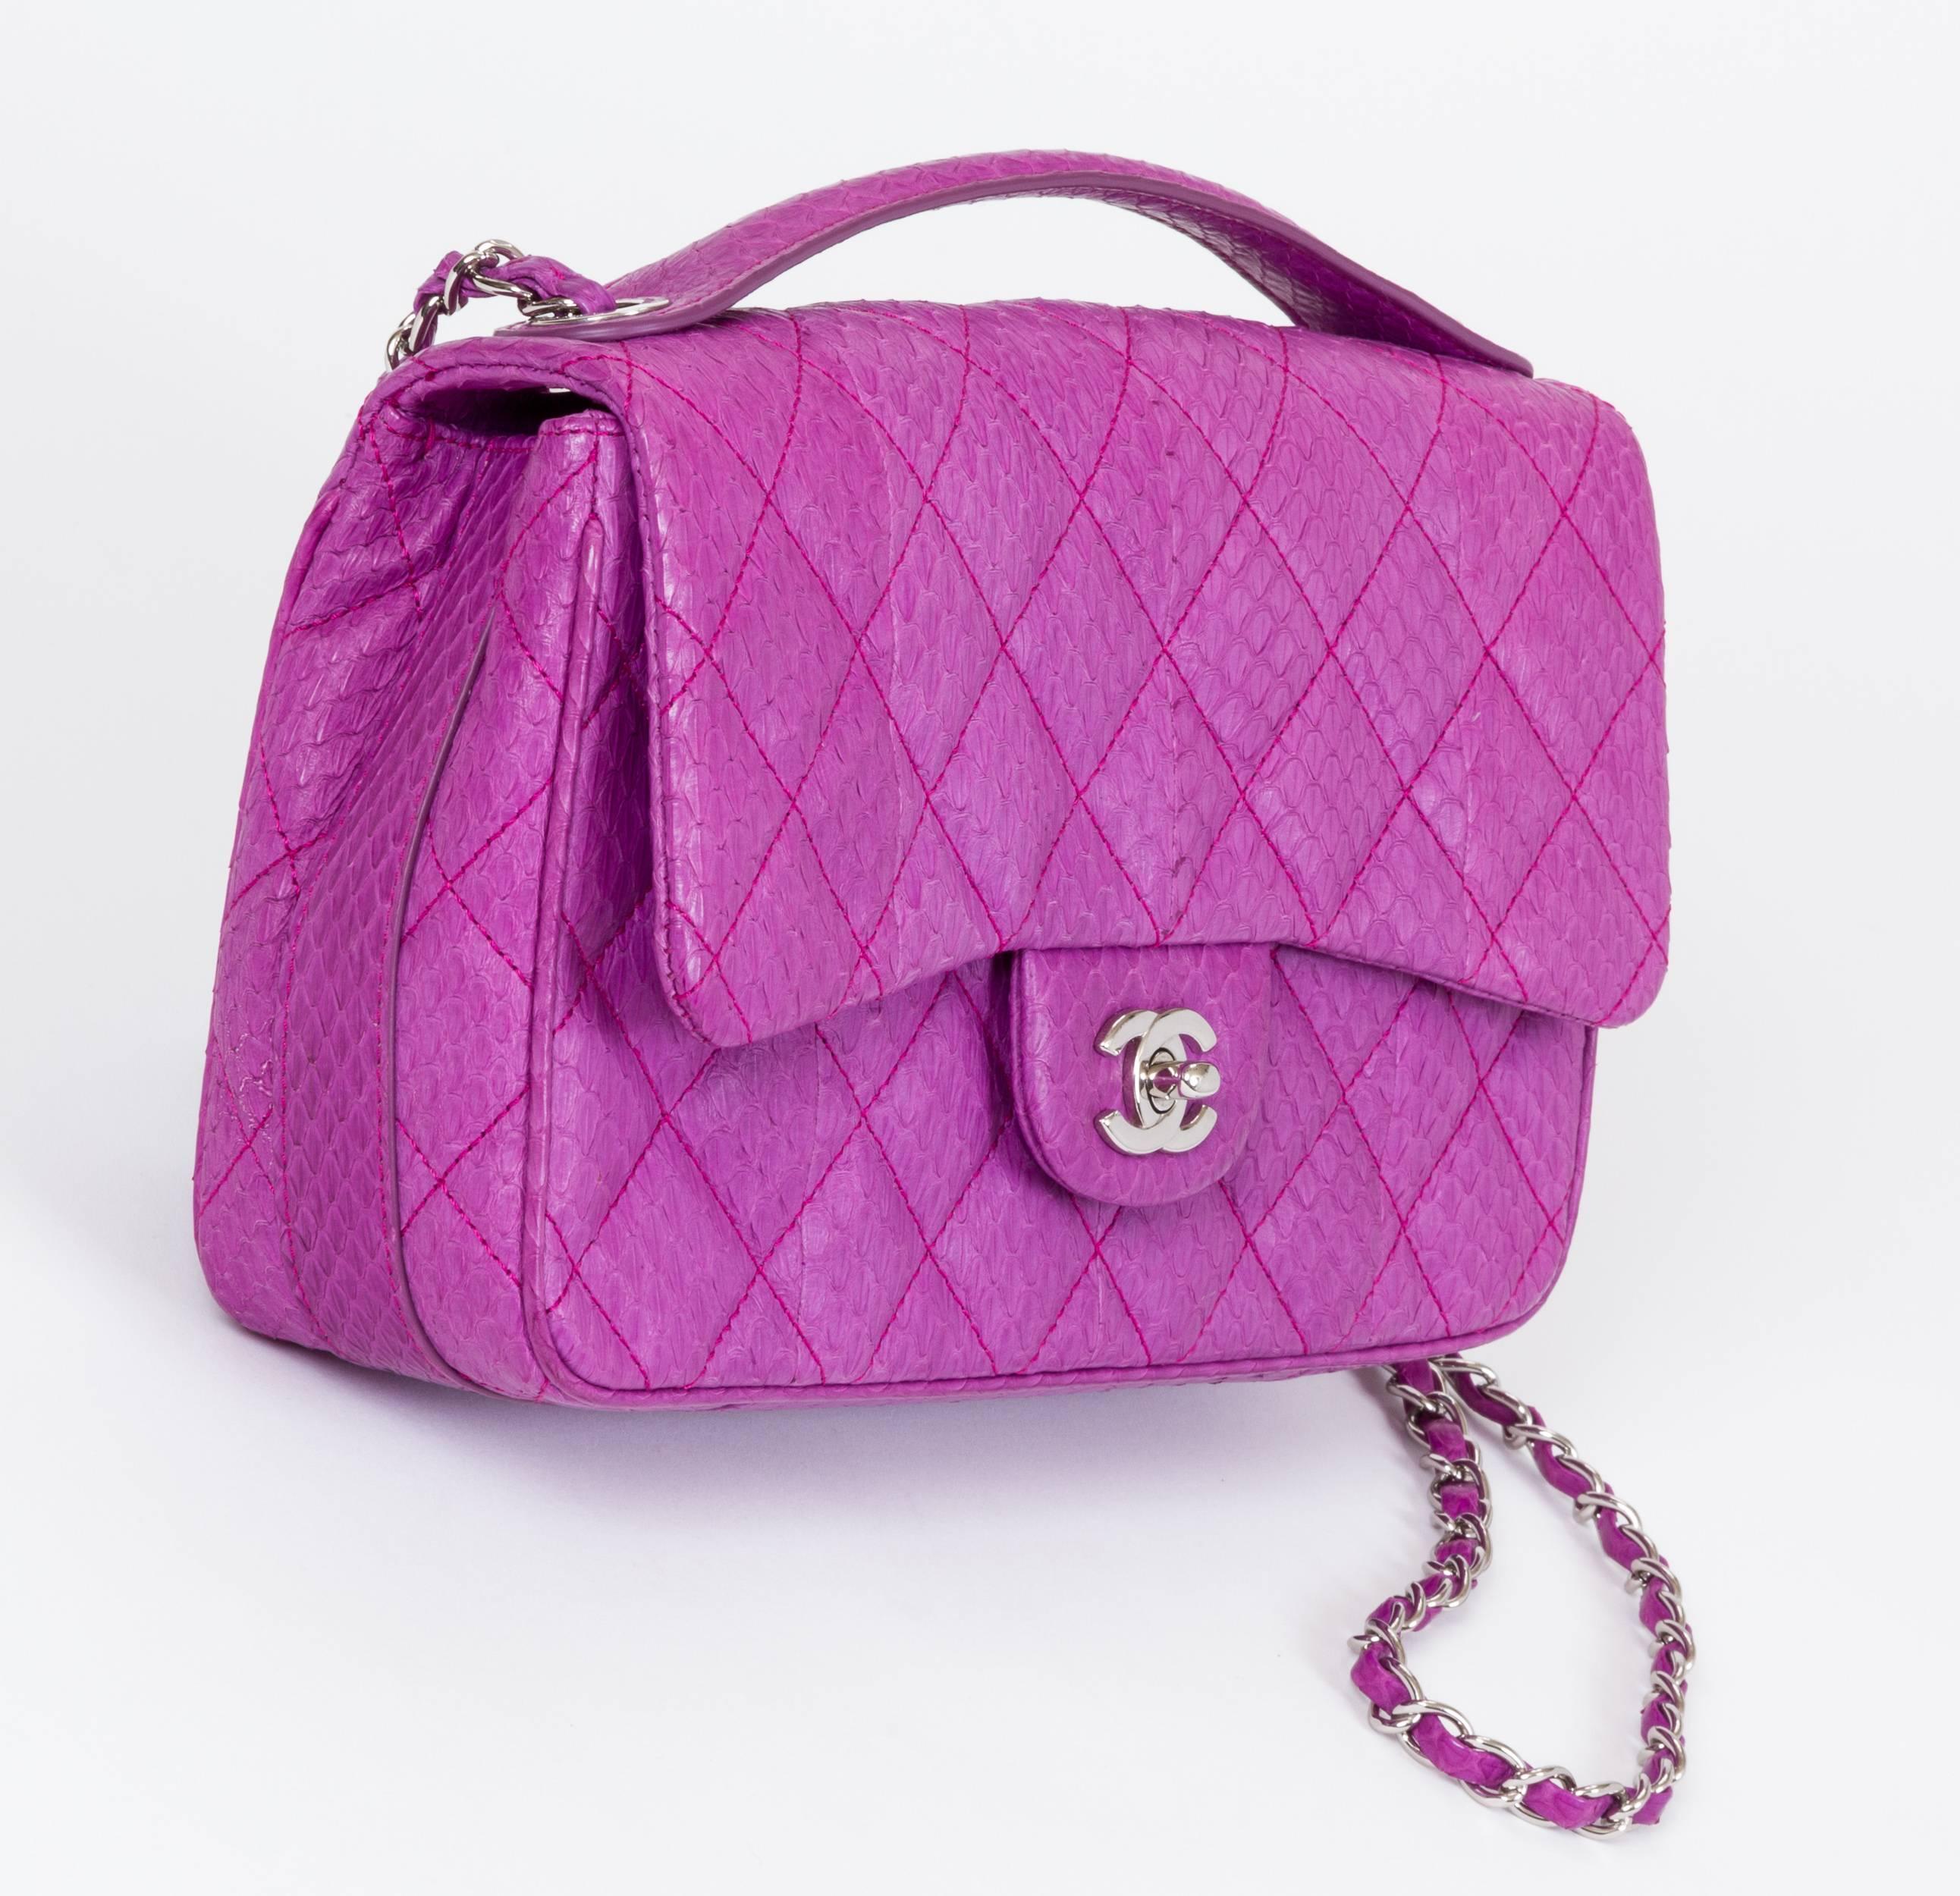 Chanel rare and brand new purple python handbag with double strap. Handle drop 1